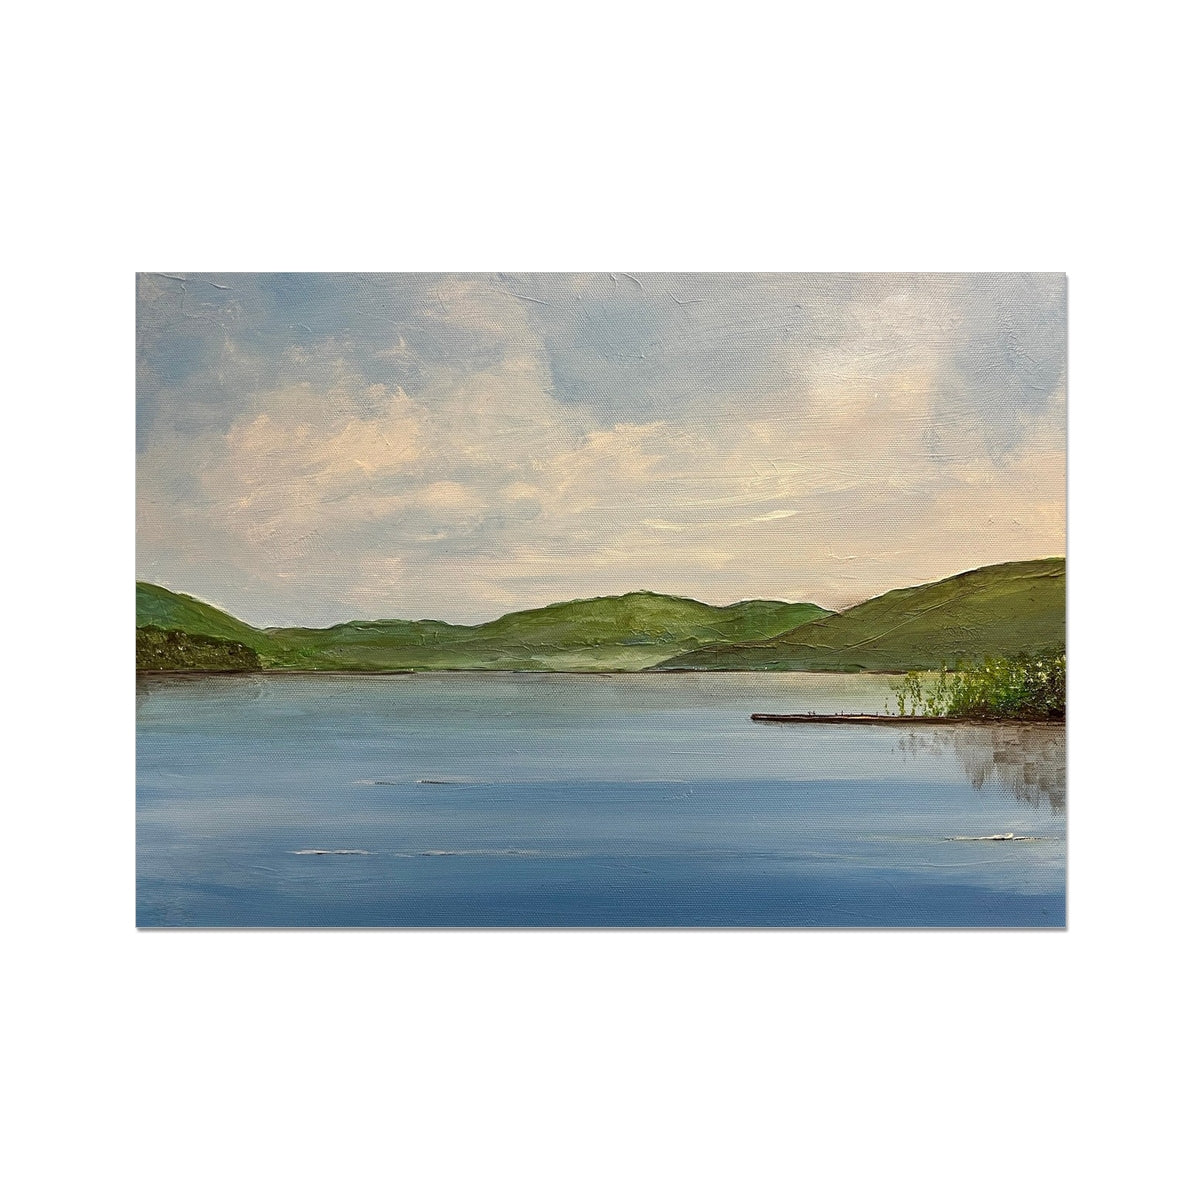 Loch Tay ii Painting | Fine Art Prints From Scotland-Unframed Prints-Scottish Lochs & Mountains Art Gallery-A2 Landscape-Paintings, Prints, Homeware, Art Gifts From Scotland By Scottish Artist Kevin Hunter